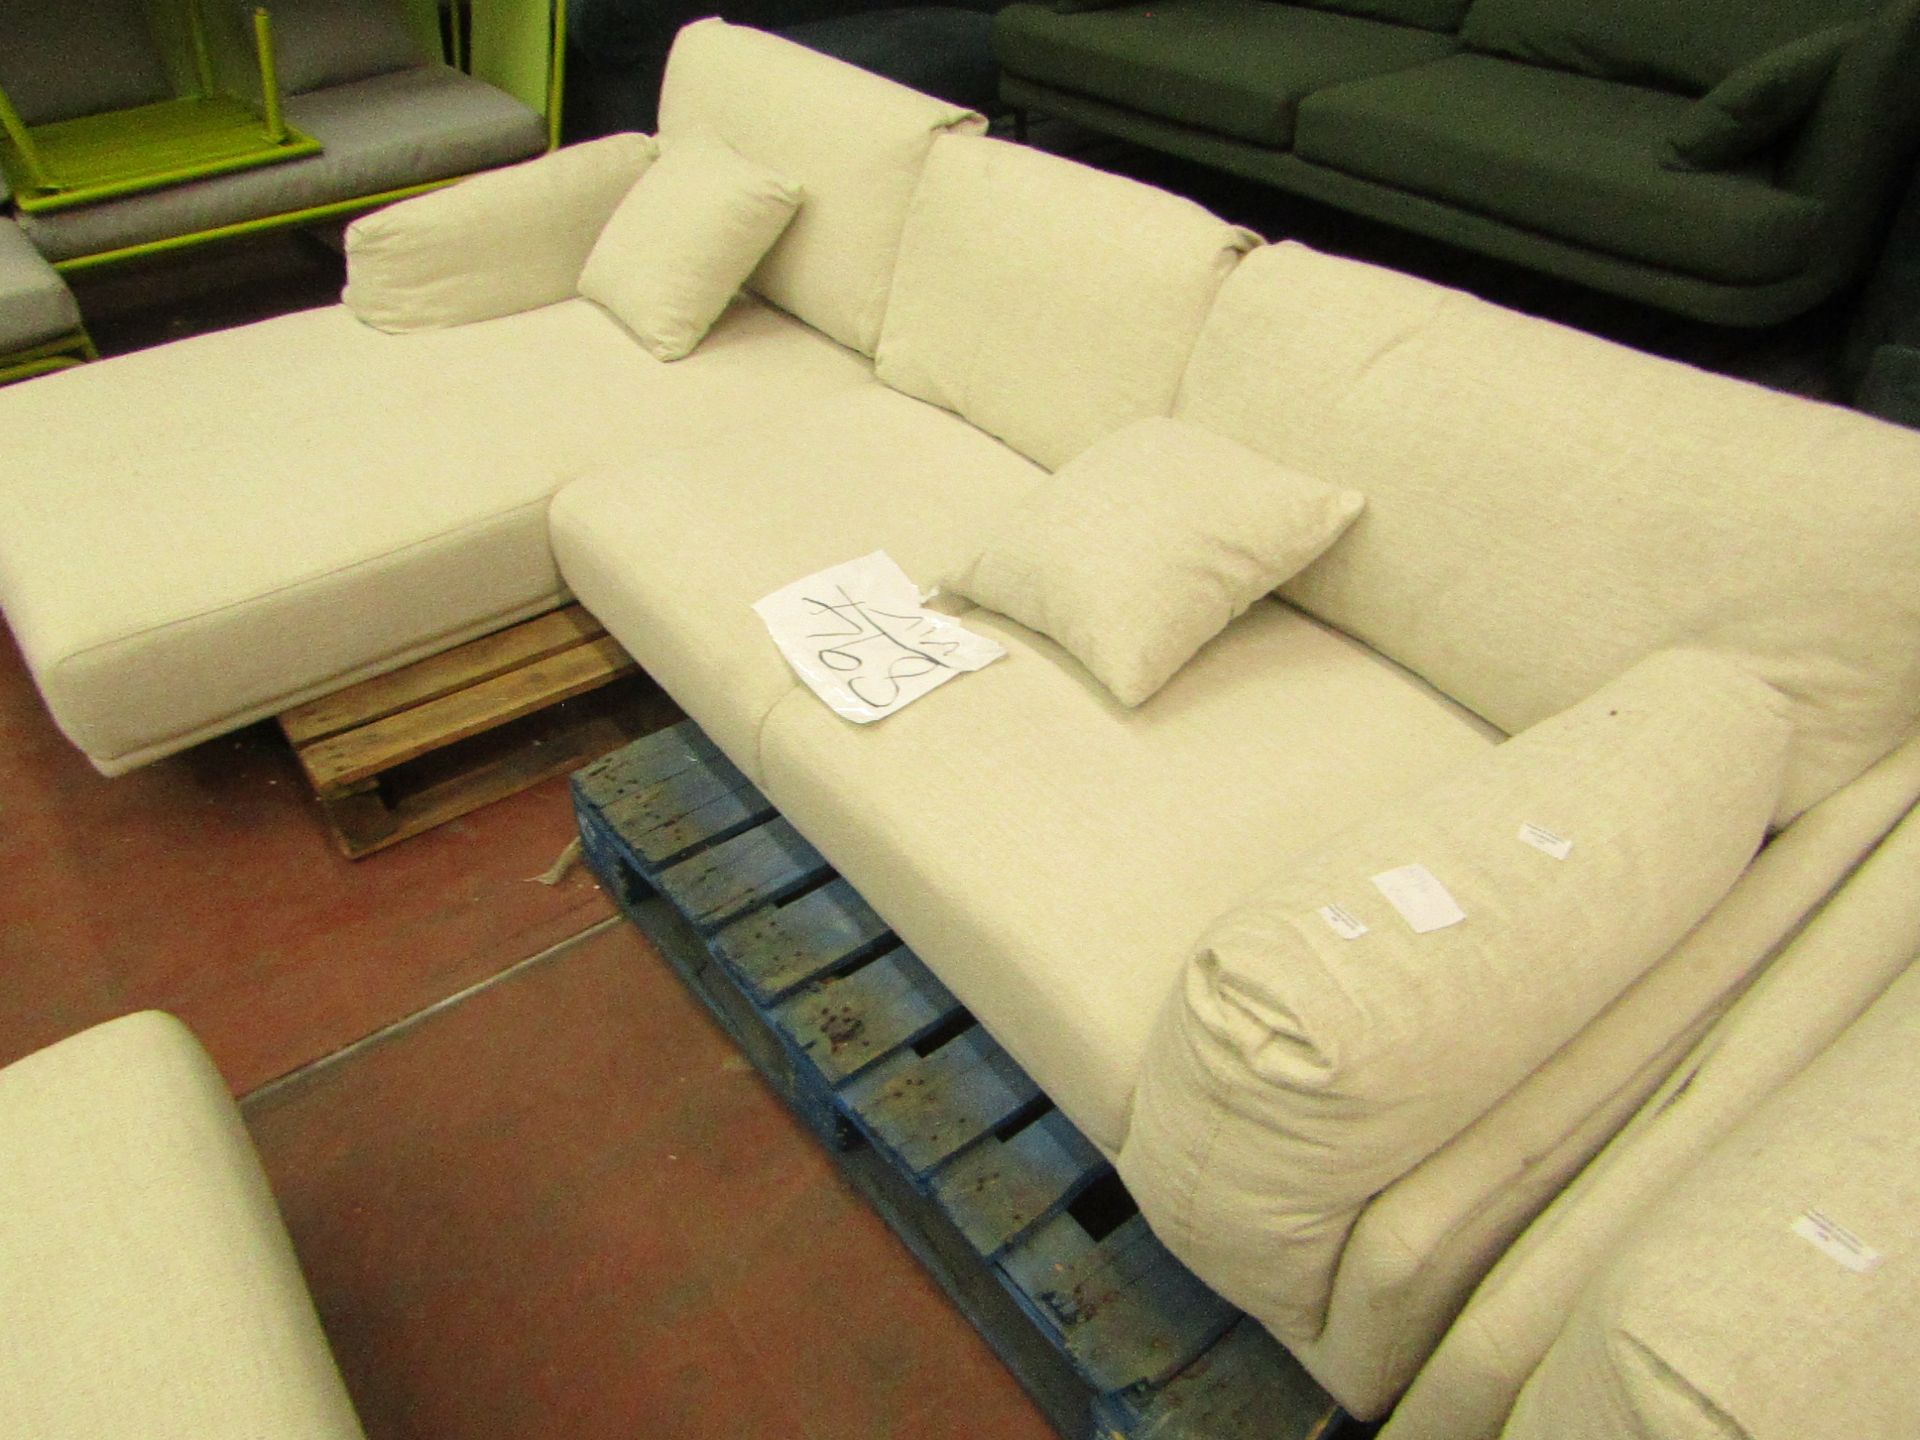 1 x Vivense Leo Corner Sofa Chaise Left, Ecru RRP £999.00 SKU VIV-UK9-201 TOTAL RRP £999 This lot is